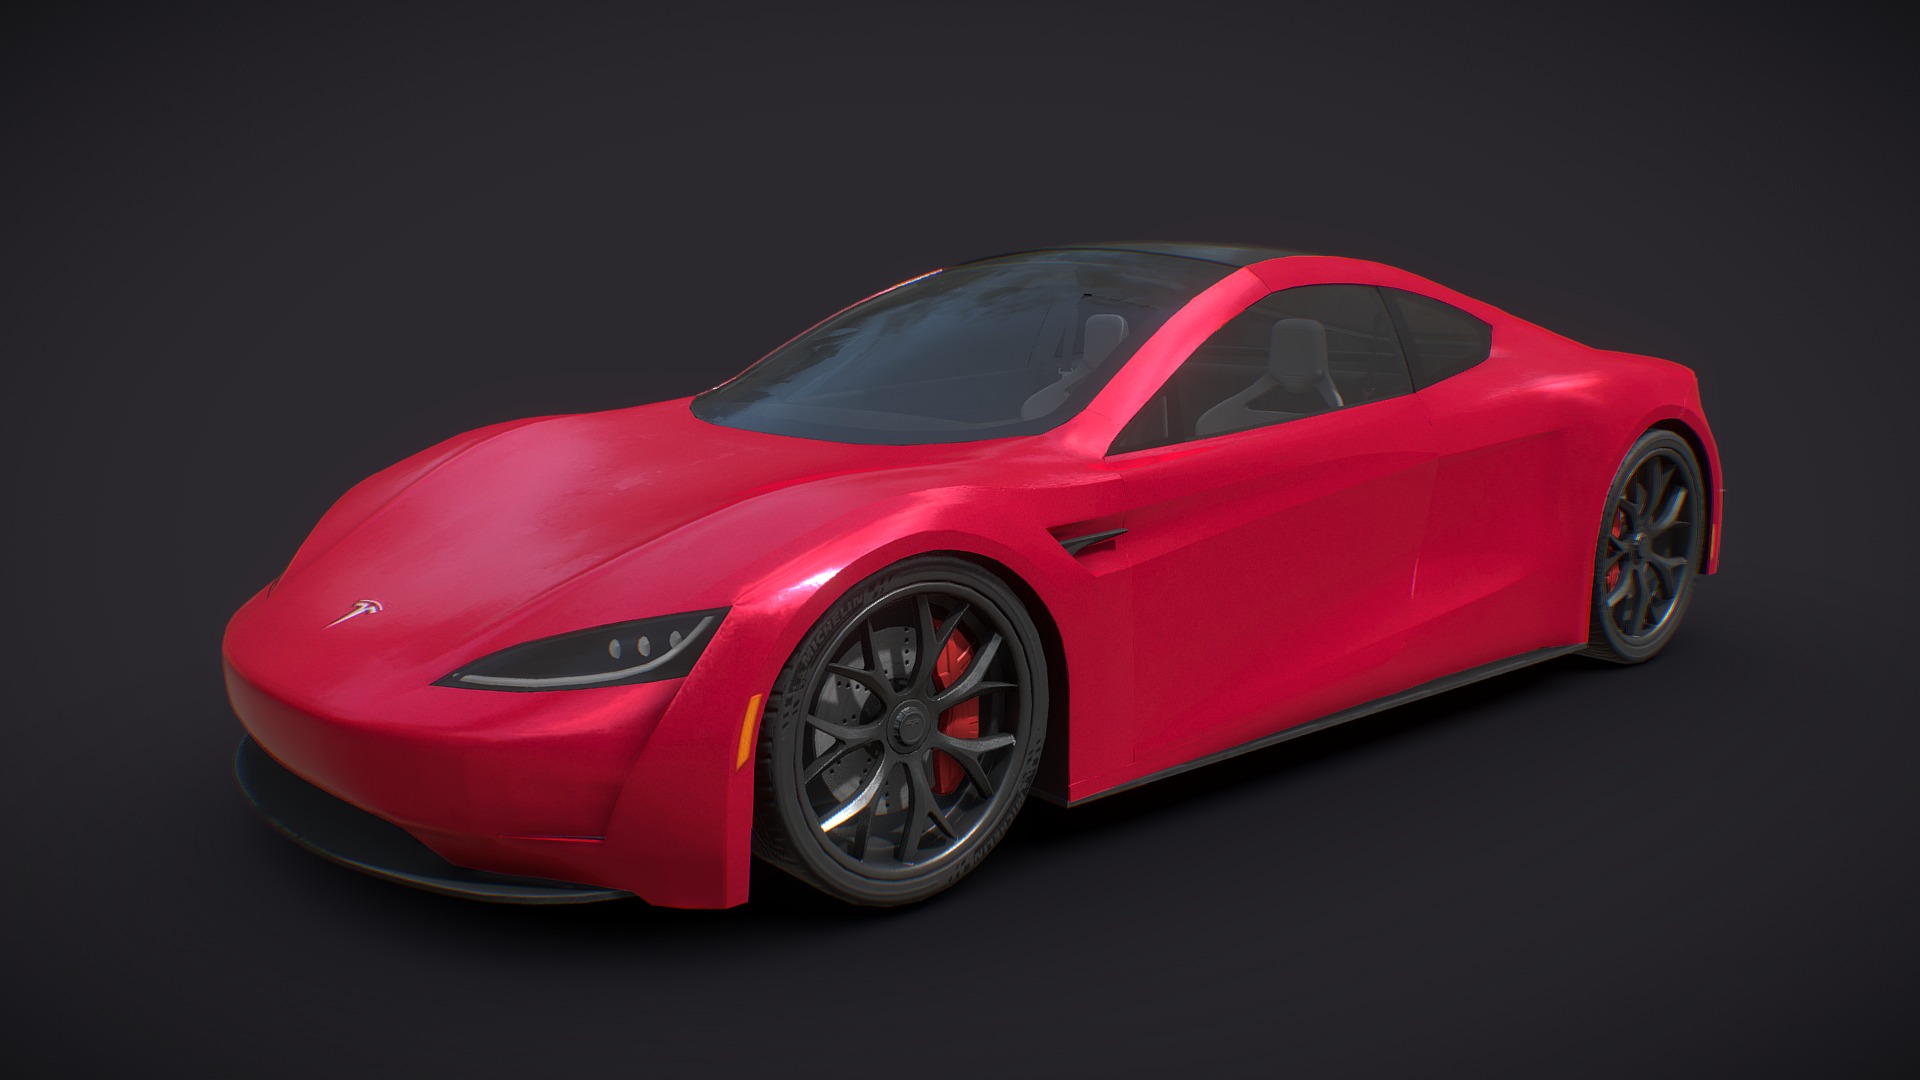 3D model Tesla Roadster 2020 - This is a 3D model of the Tesla Roadster 2020. The 3D model is about a red sports car.